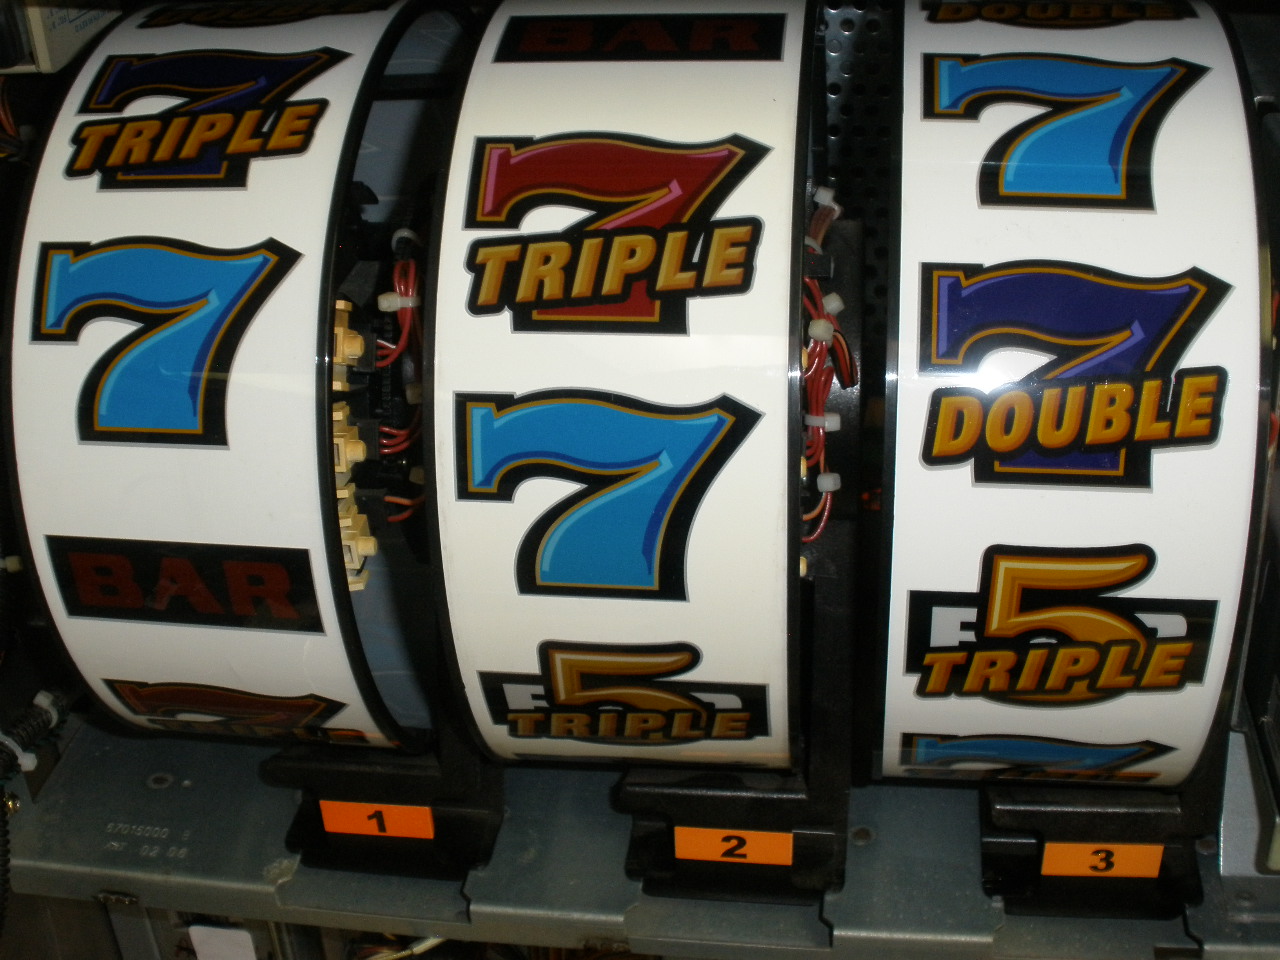 triple double strike slot machine demo play